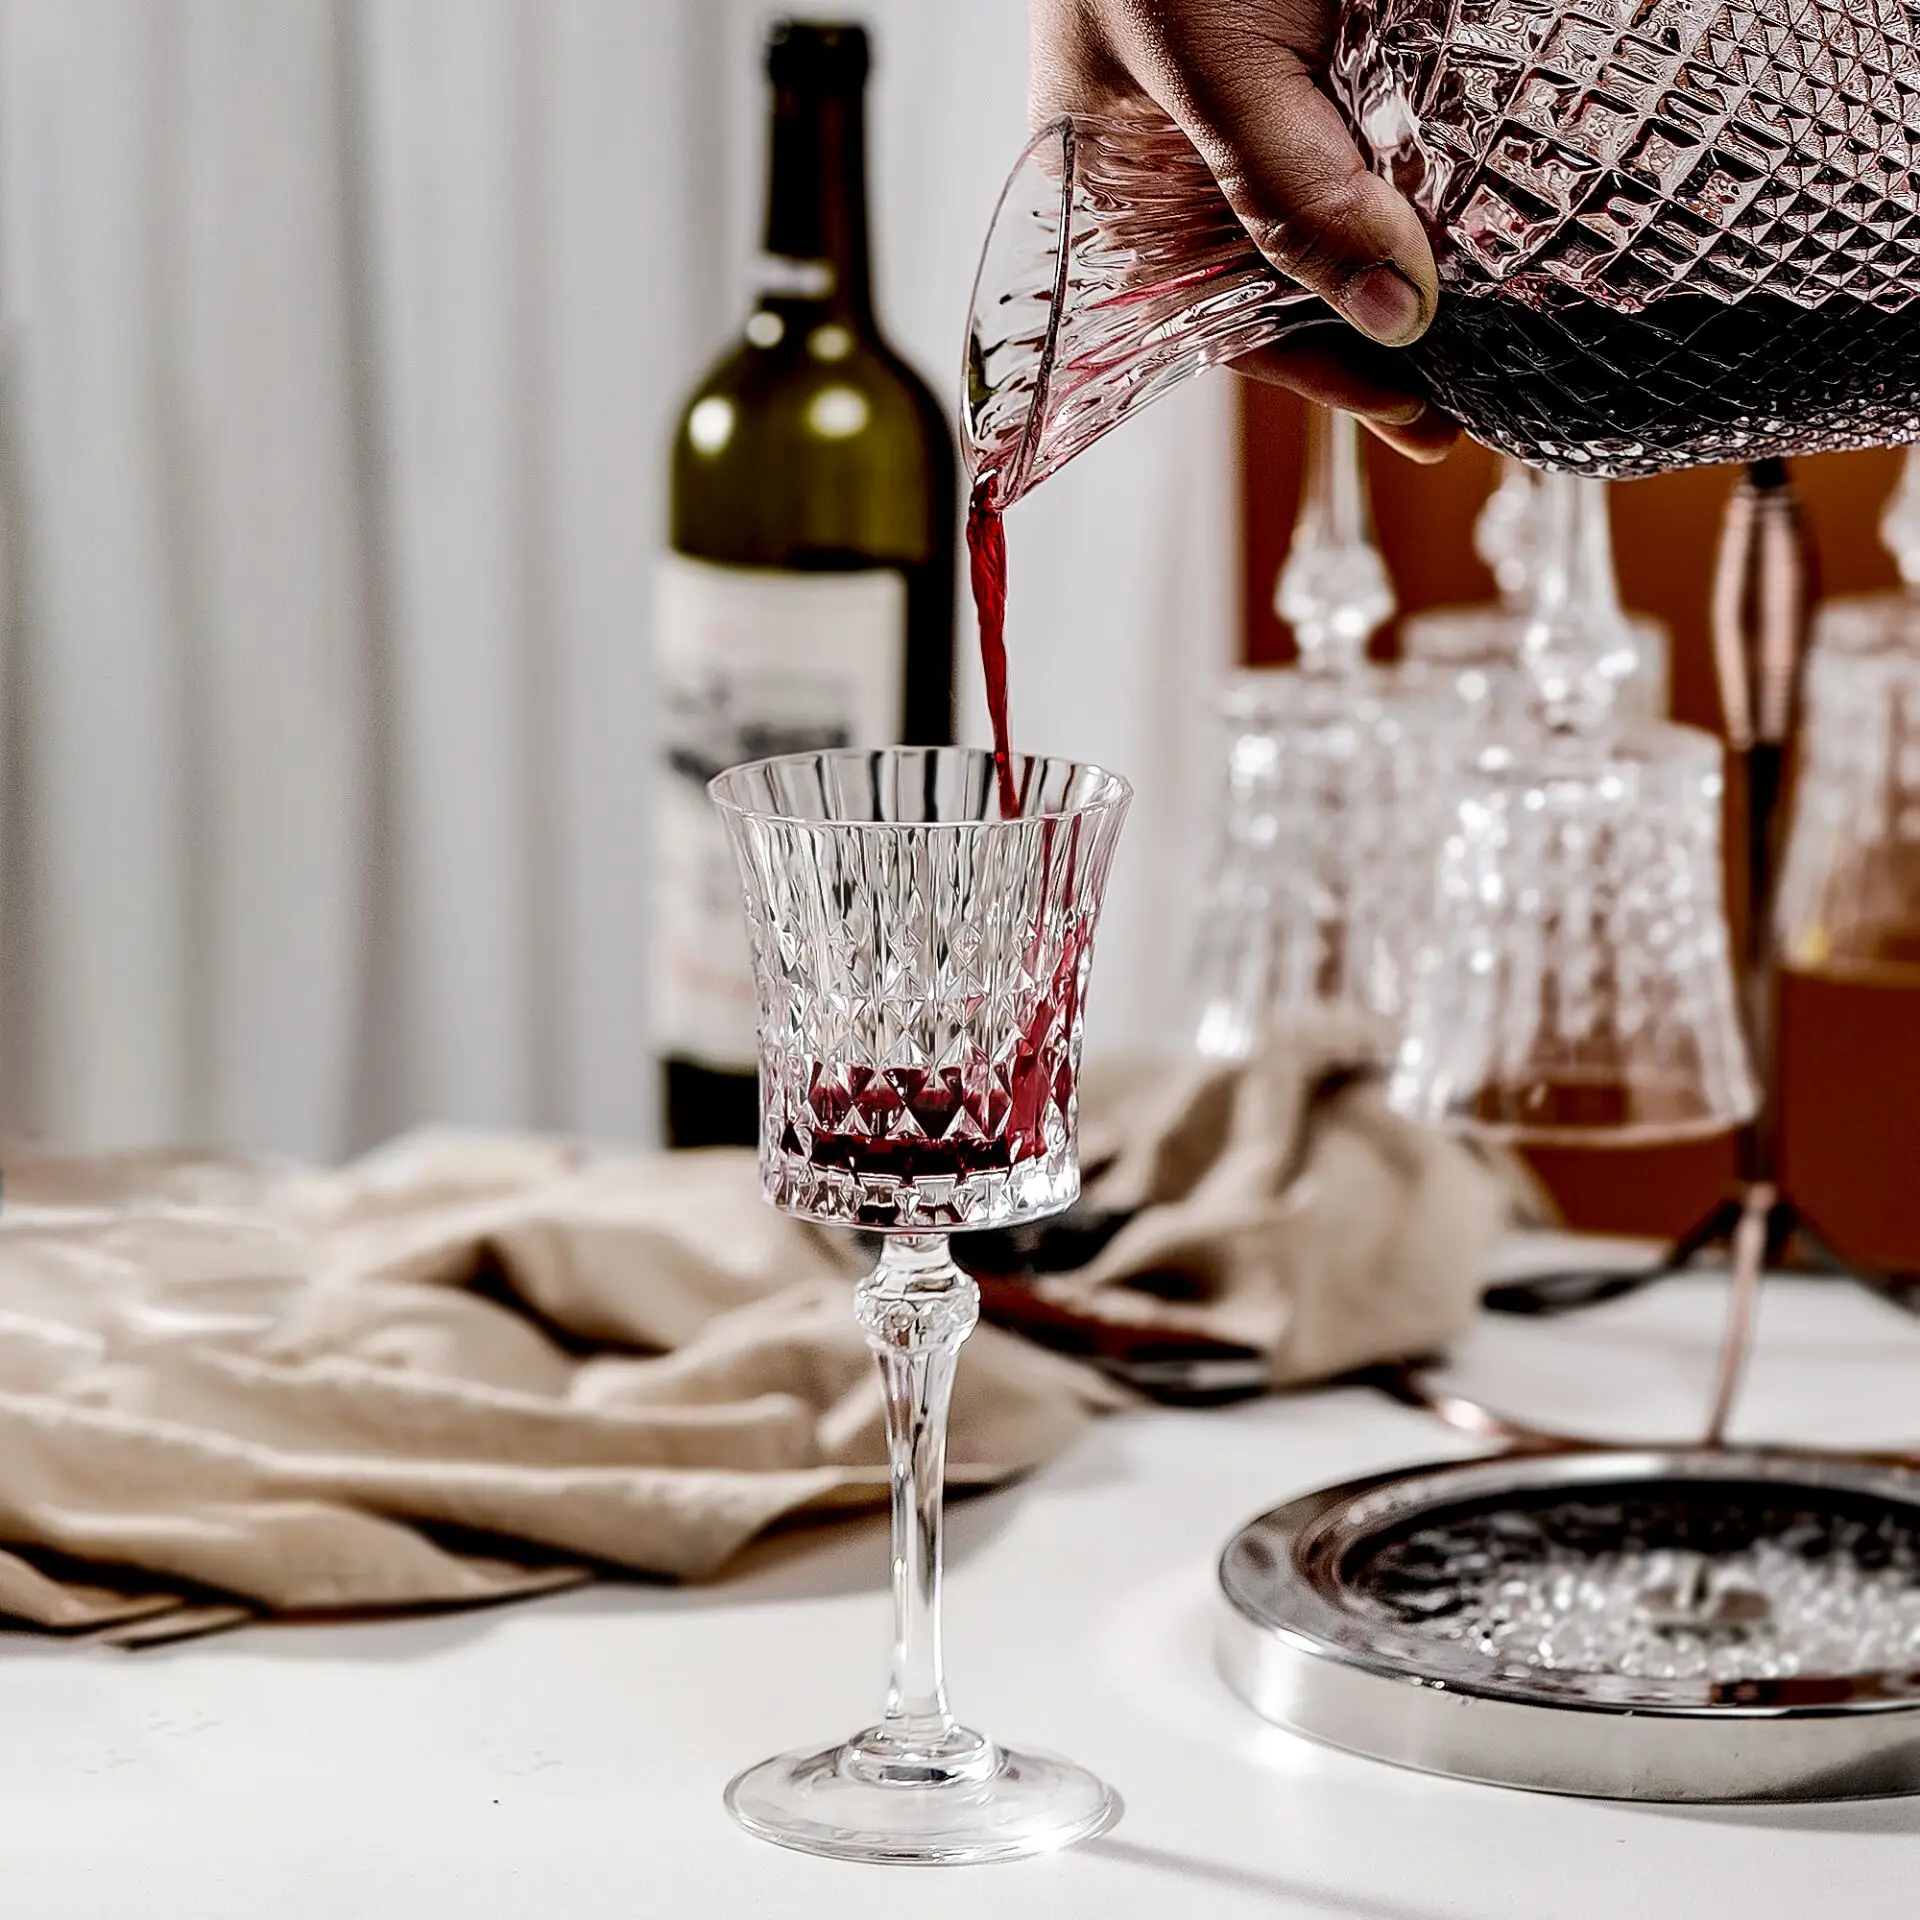 https://ae01.alicdn.com/kf/H3f951e85e25744ba8b7c016255481d07g/Rotating-Tumbler-Wine-Decanter-Goblet-Set-Luxury-European-Carved-Glass-Red-Wine-Bottle-Cups-Home-Bar.jpg